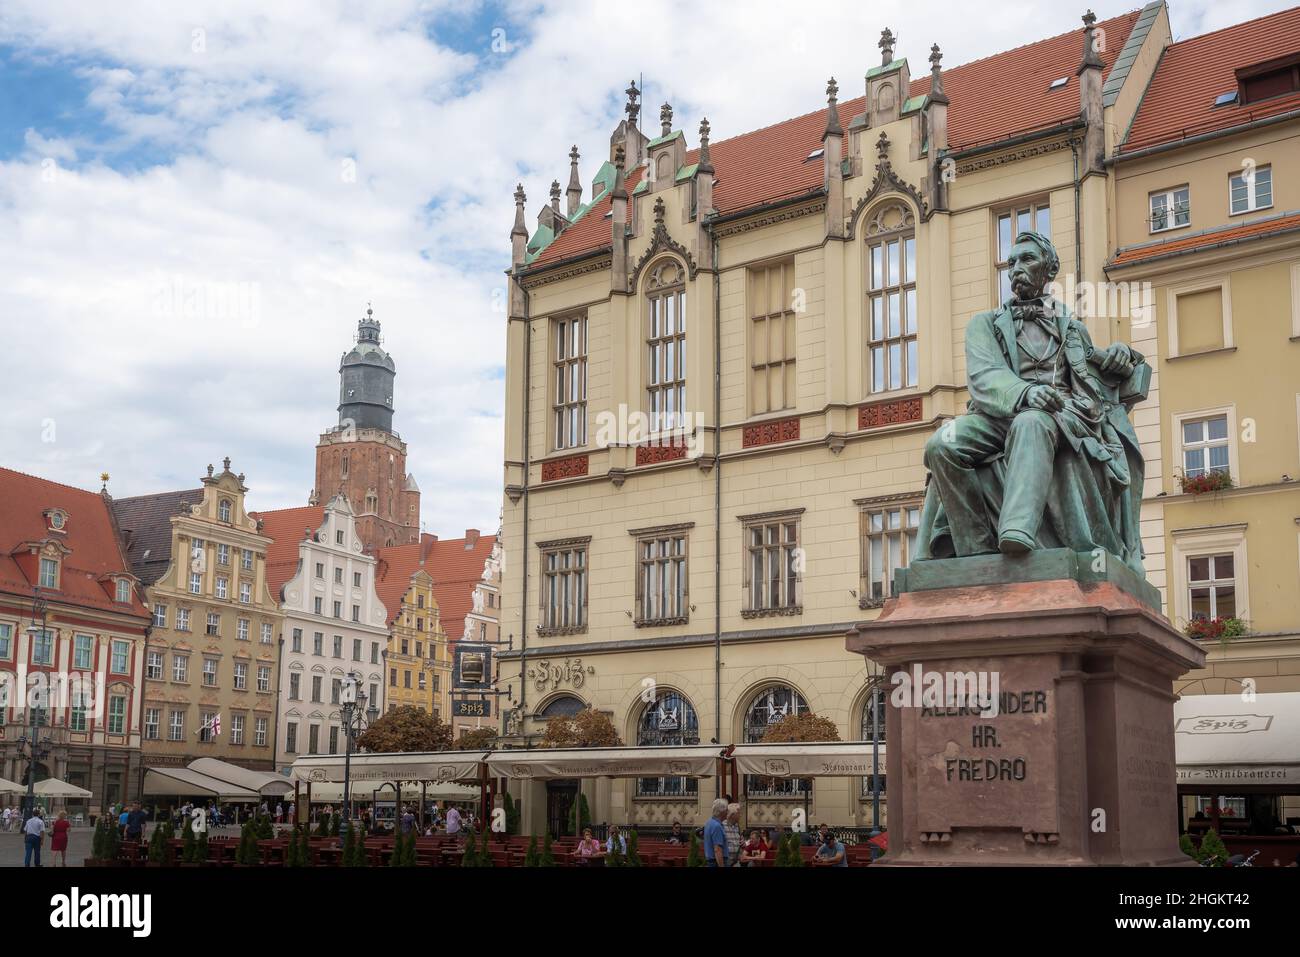 Aleksander Fredro Monument at Market Square - Wroclaw, Poland Stock Photo